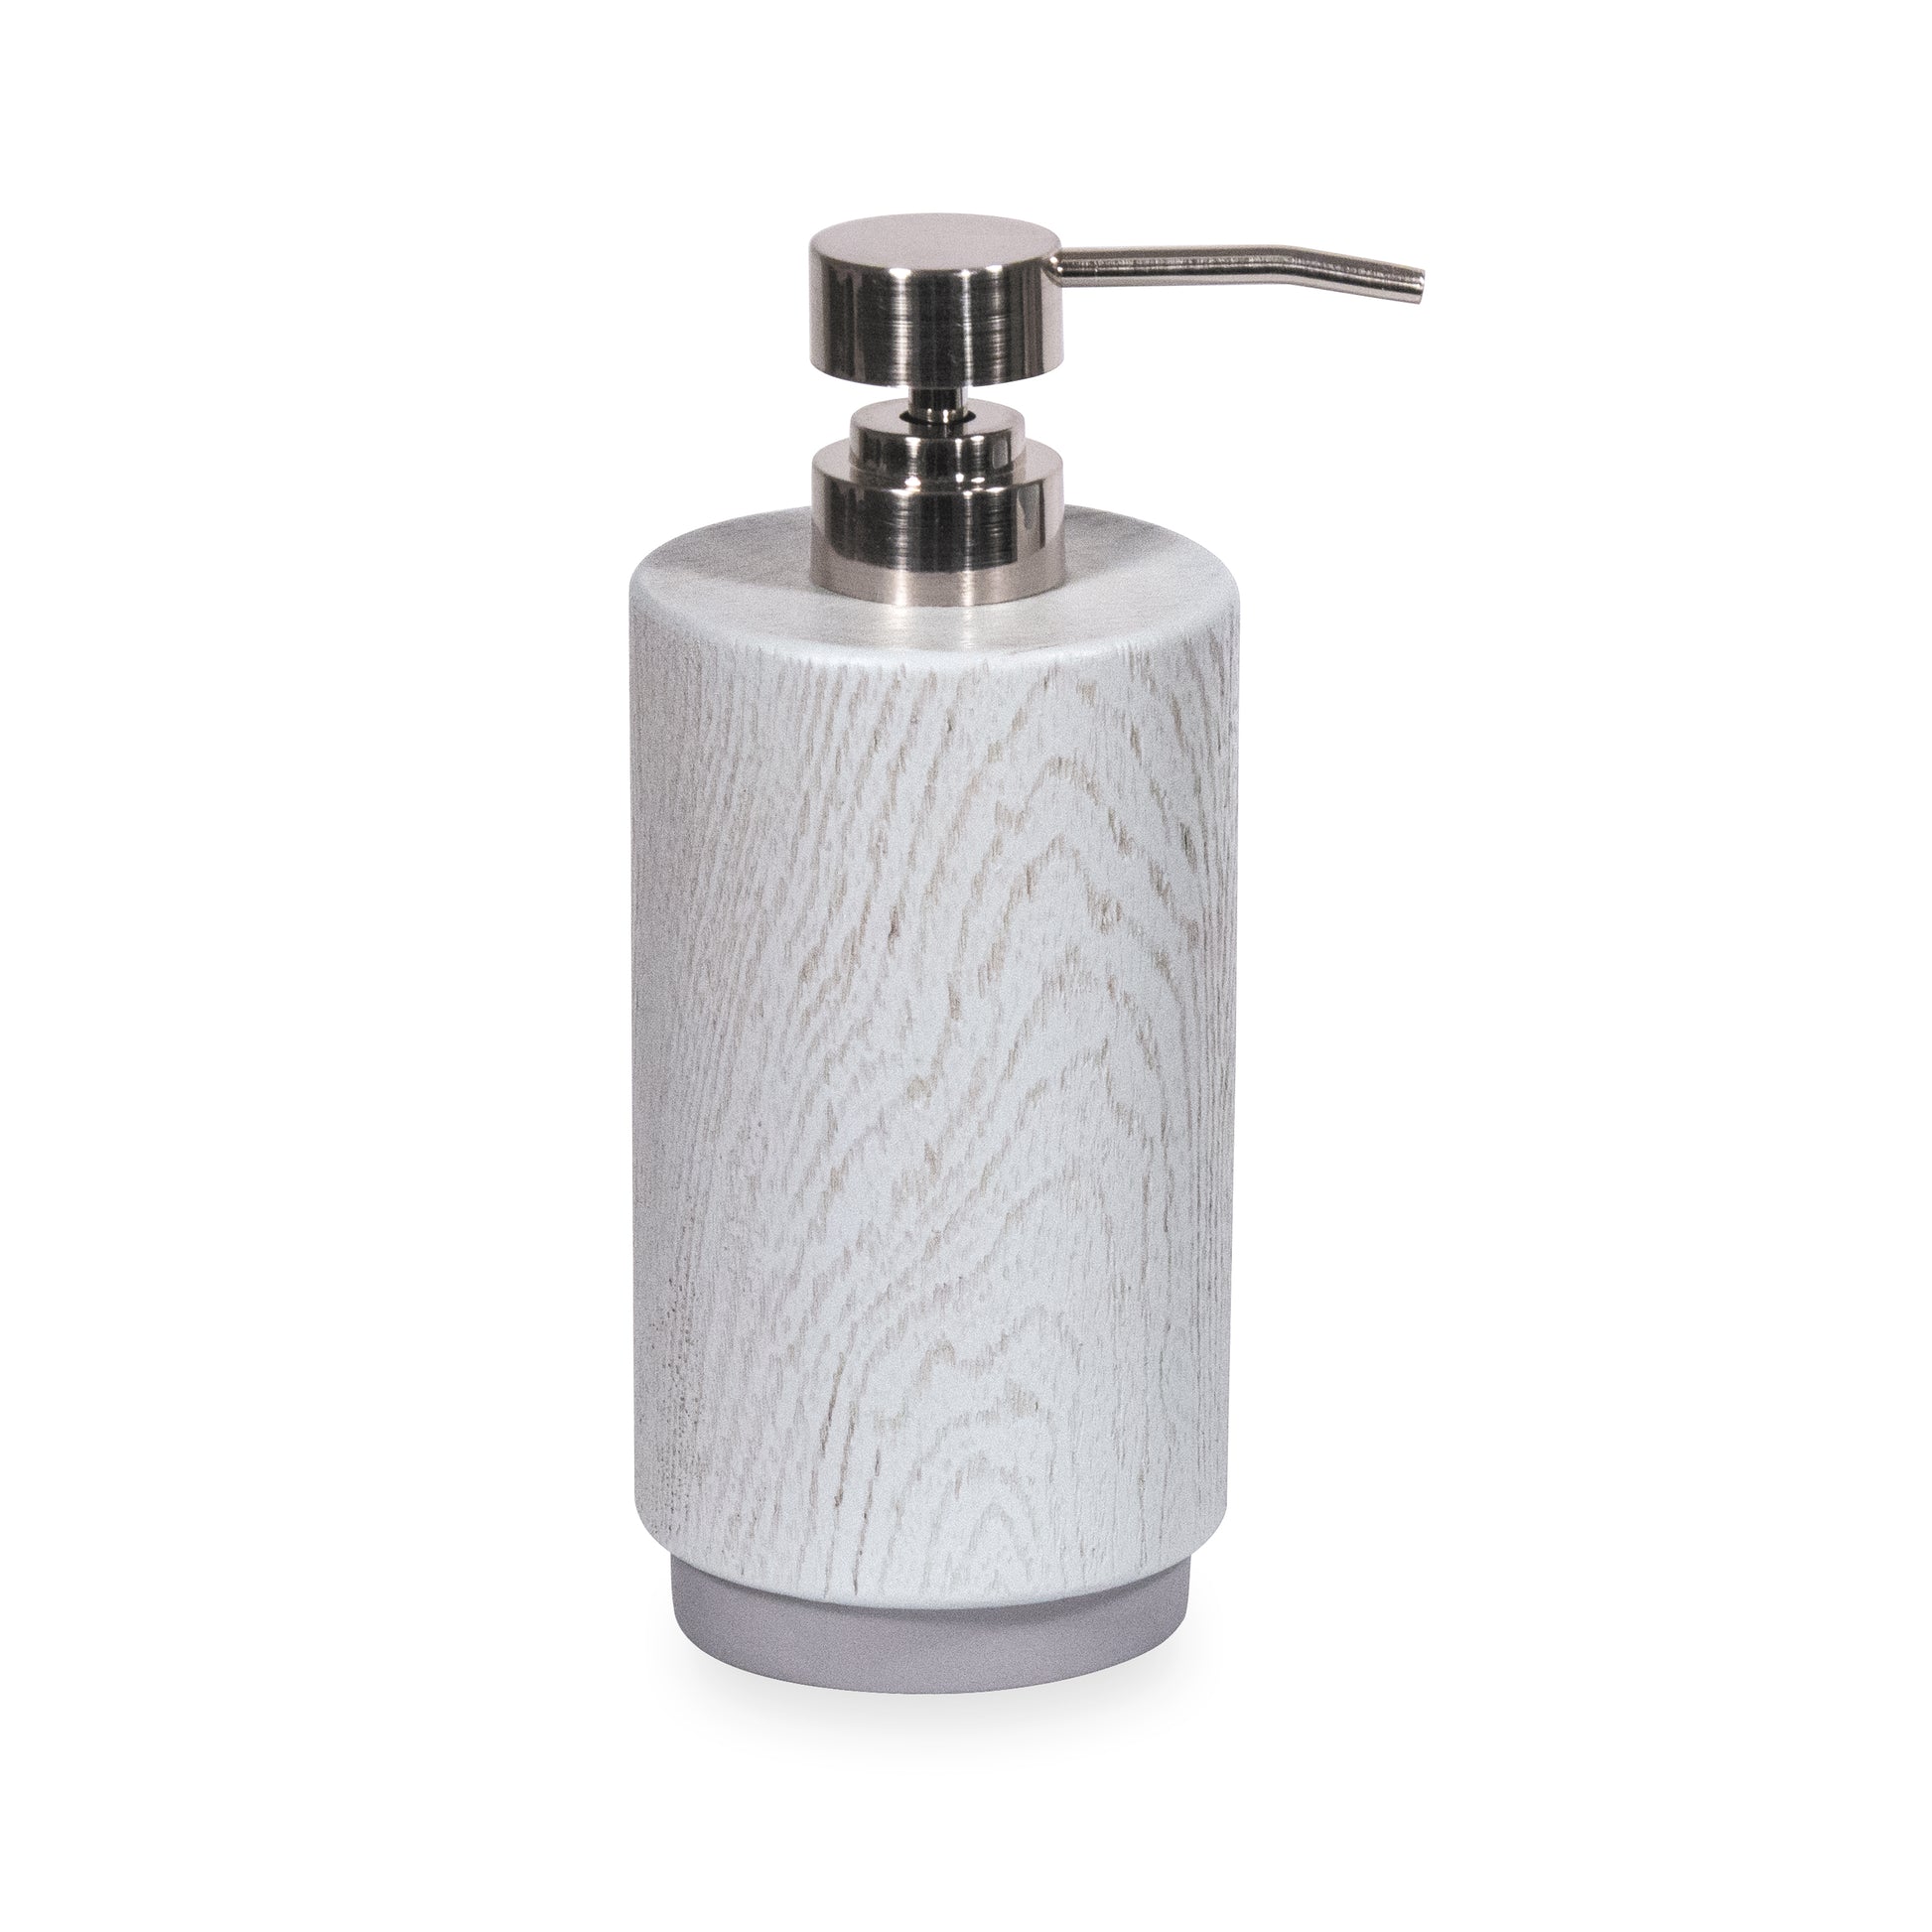 DKNY Grey Wood Accessories Soap Lotion Pump Dispenser